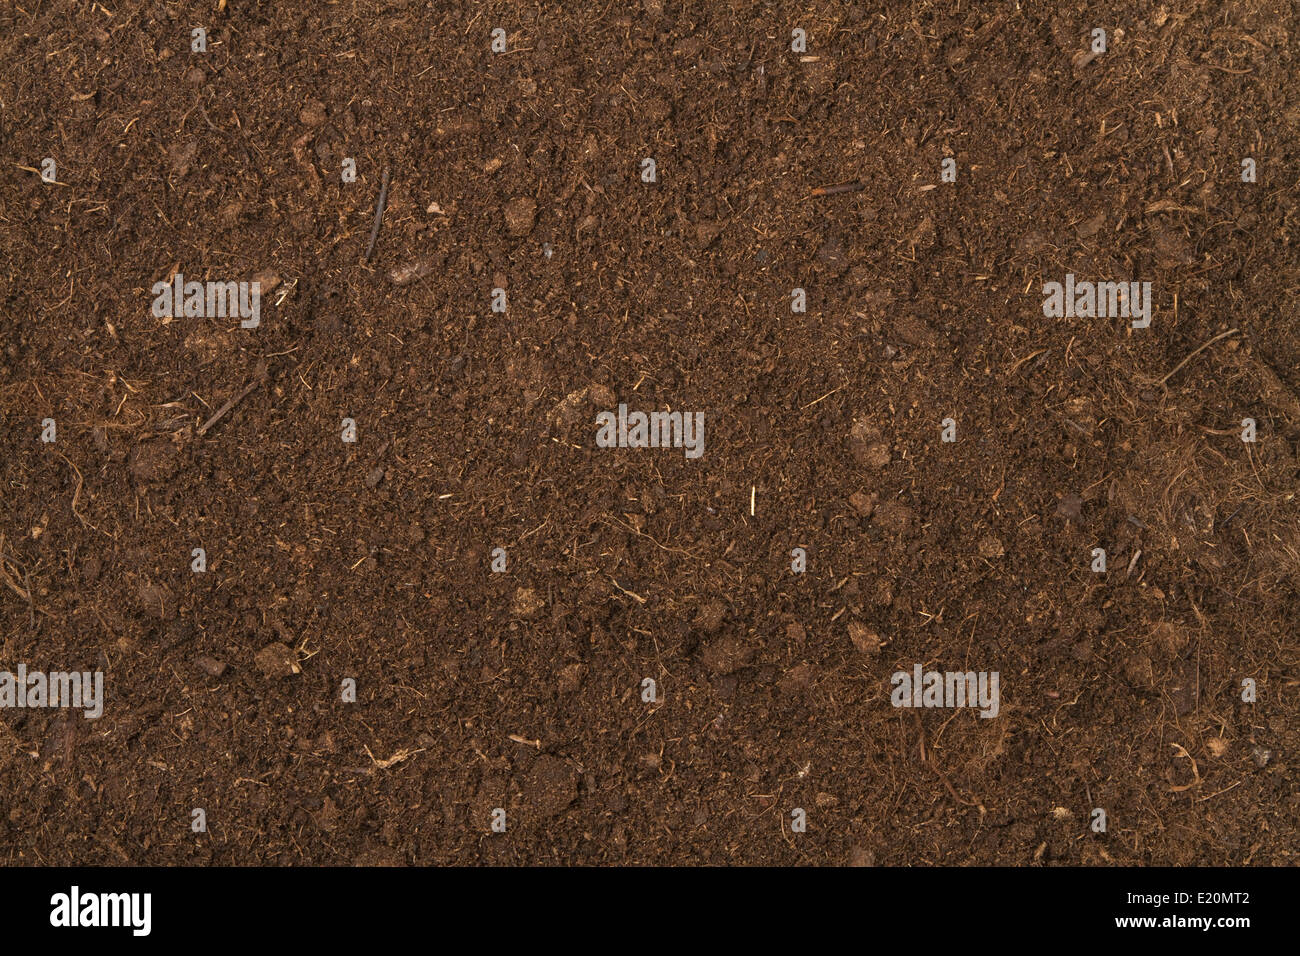 peat soil Stock Photo